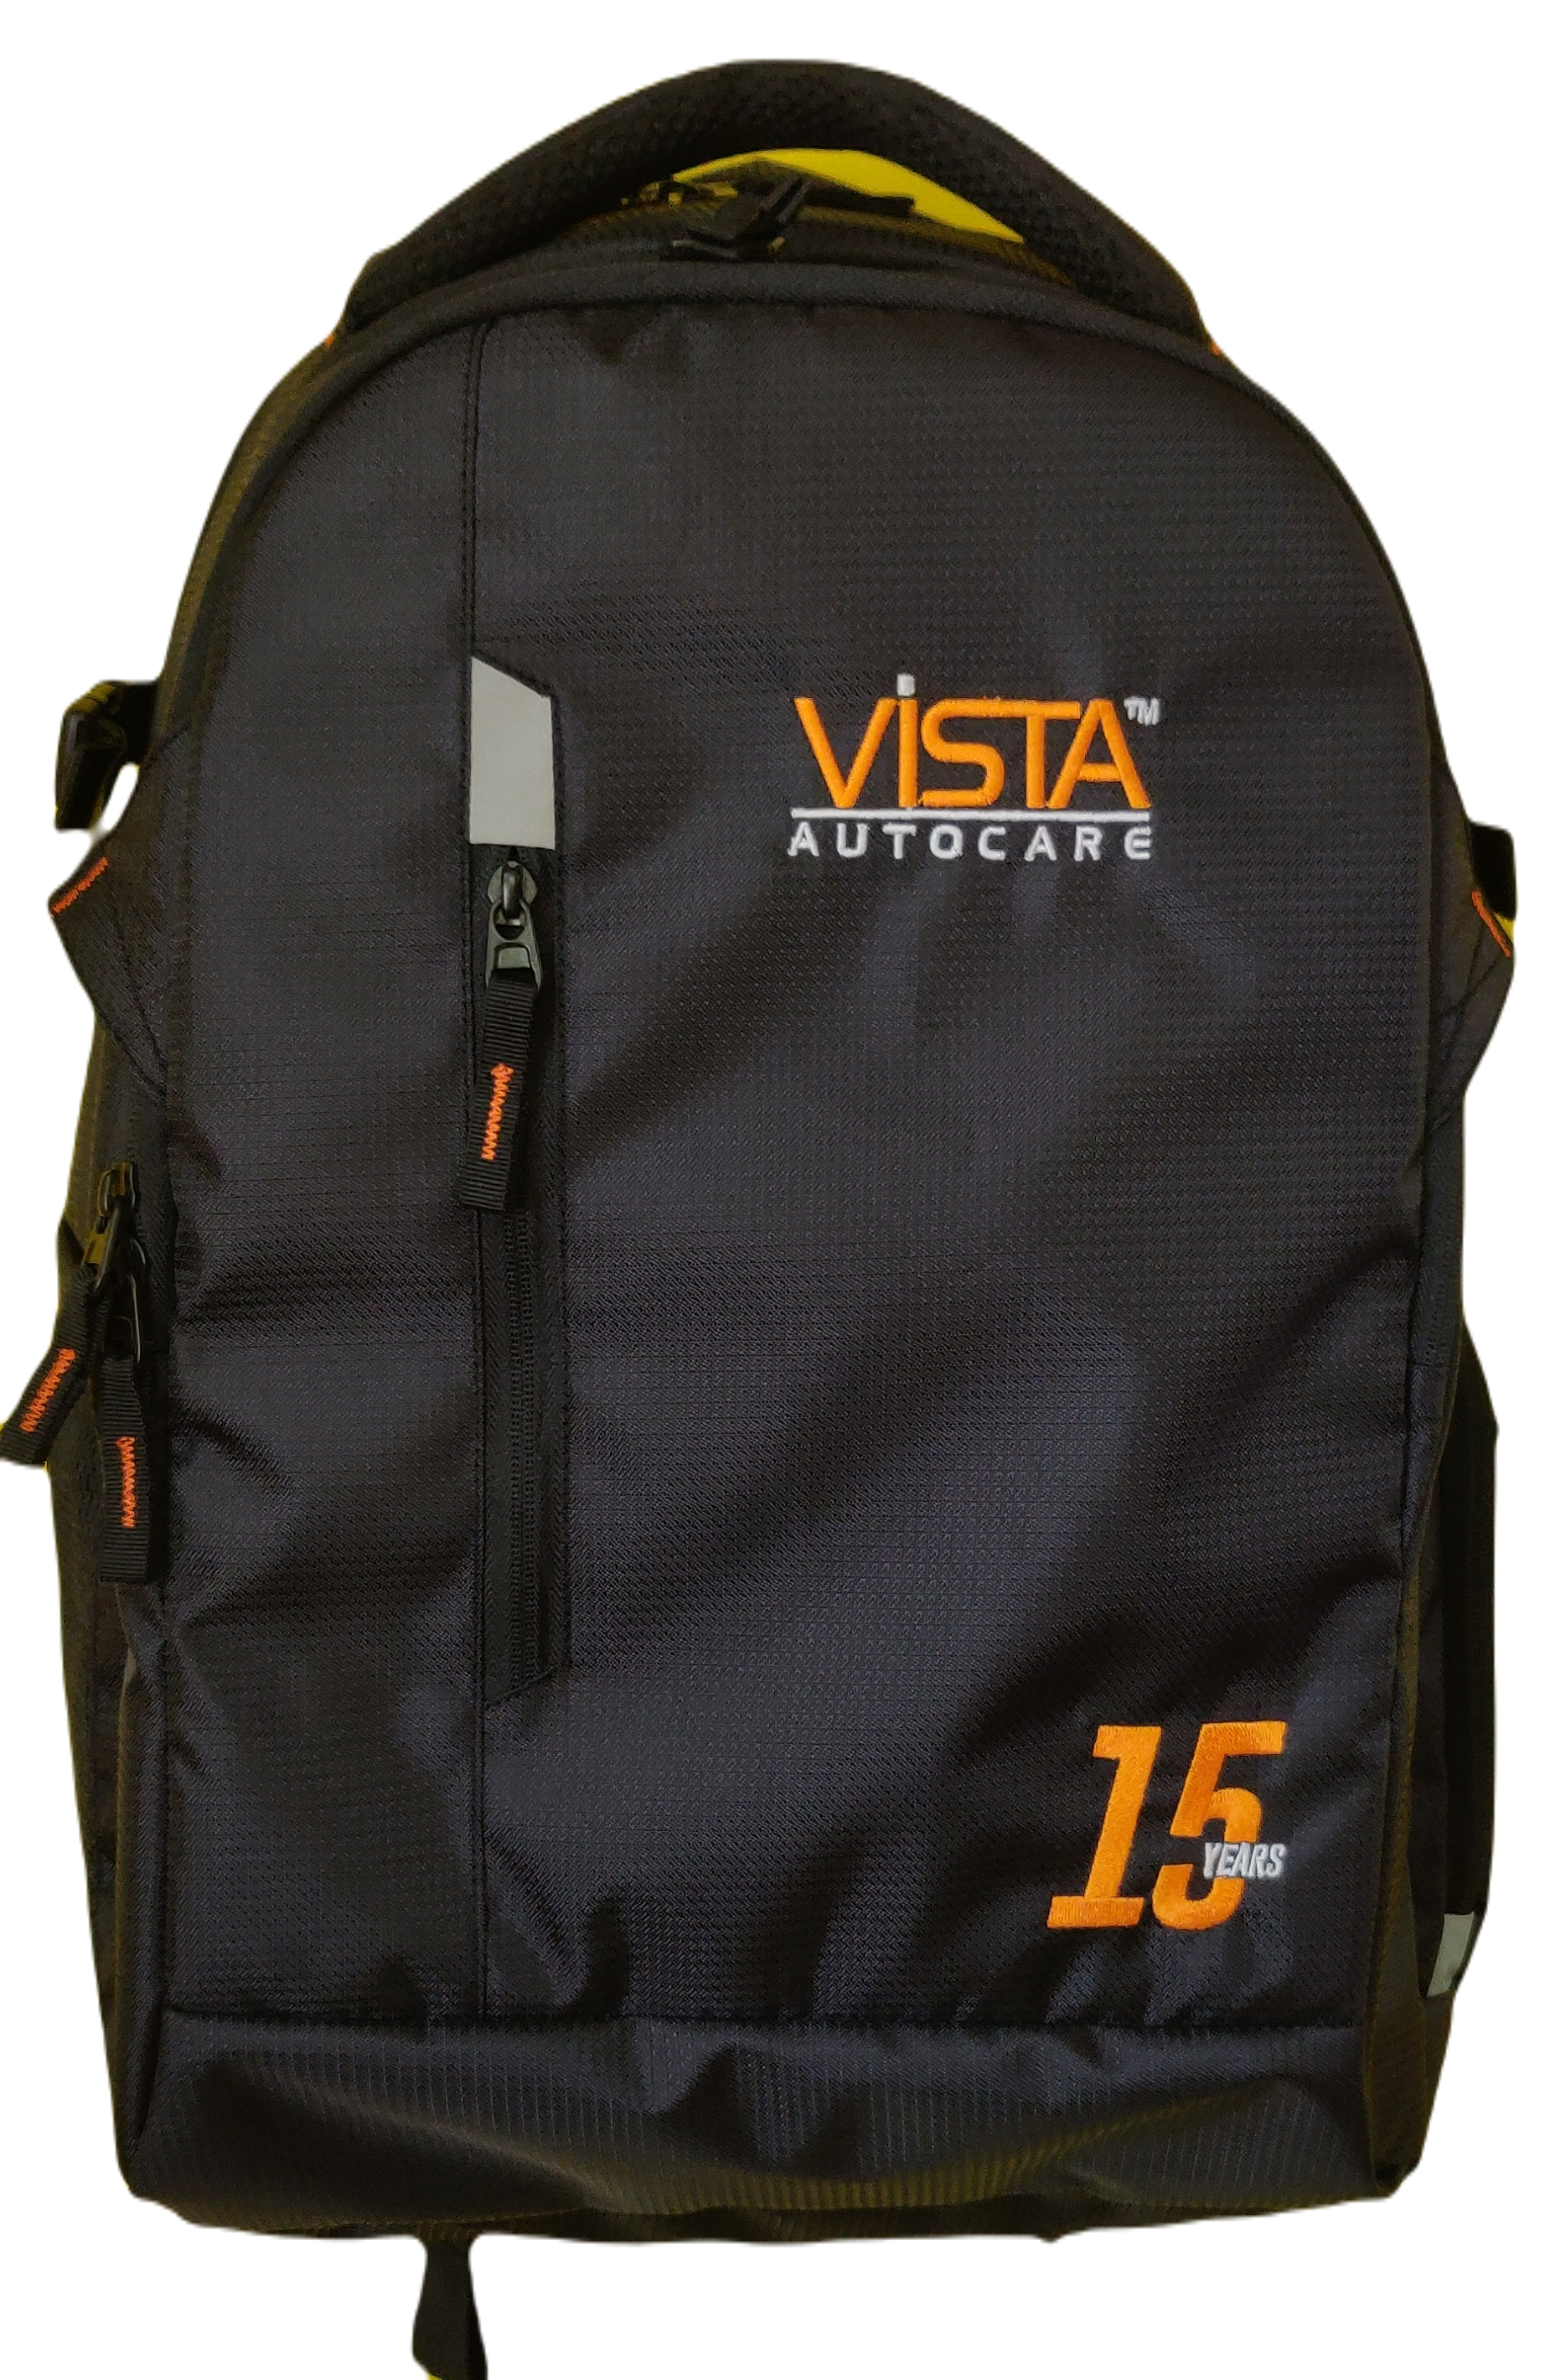 Bag Manufacturer  College Bag  School Bag  Laptop Bag  Duffle Bag   Travel Bag  Bangalore  India